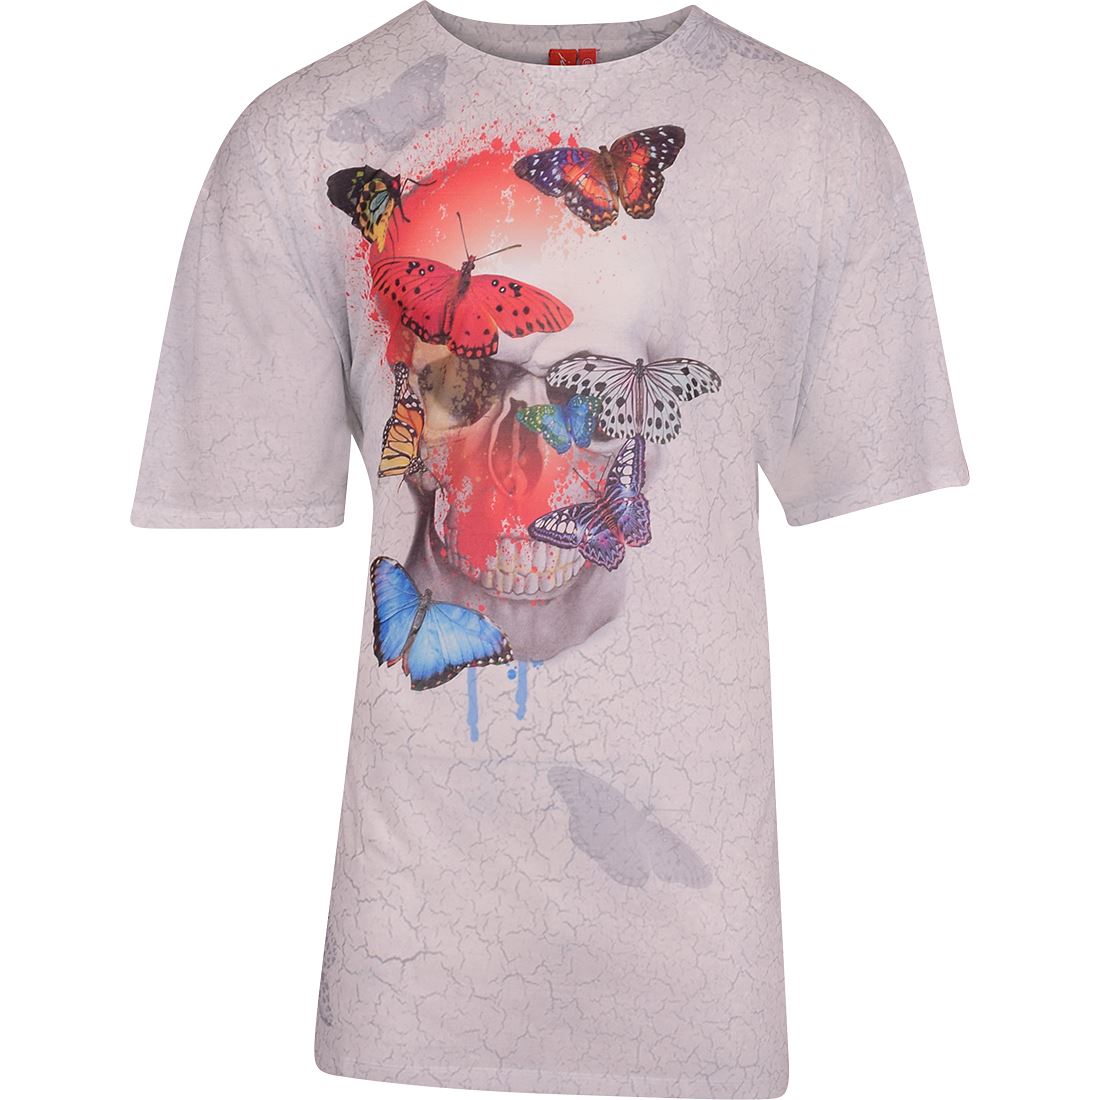 Mens Skull Butterfly T-Shirt Desert Wasteland Graphic Print Tee Big 4XL 5XL